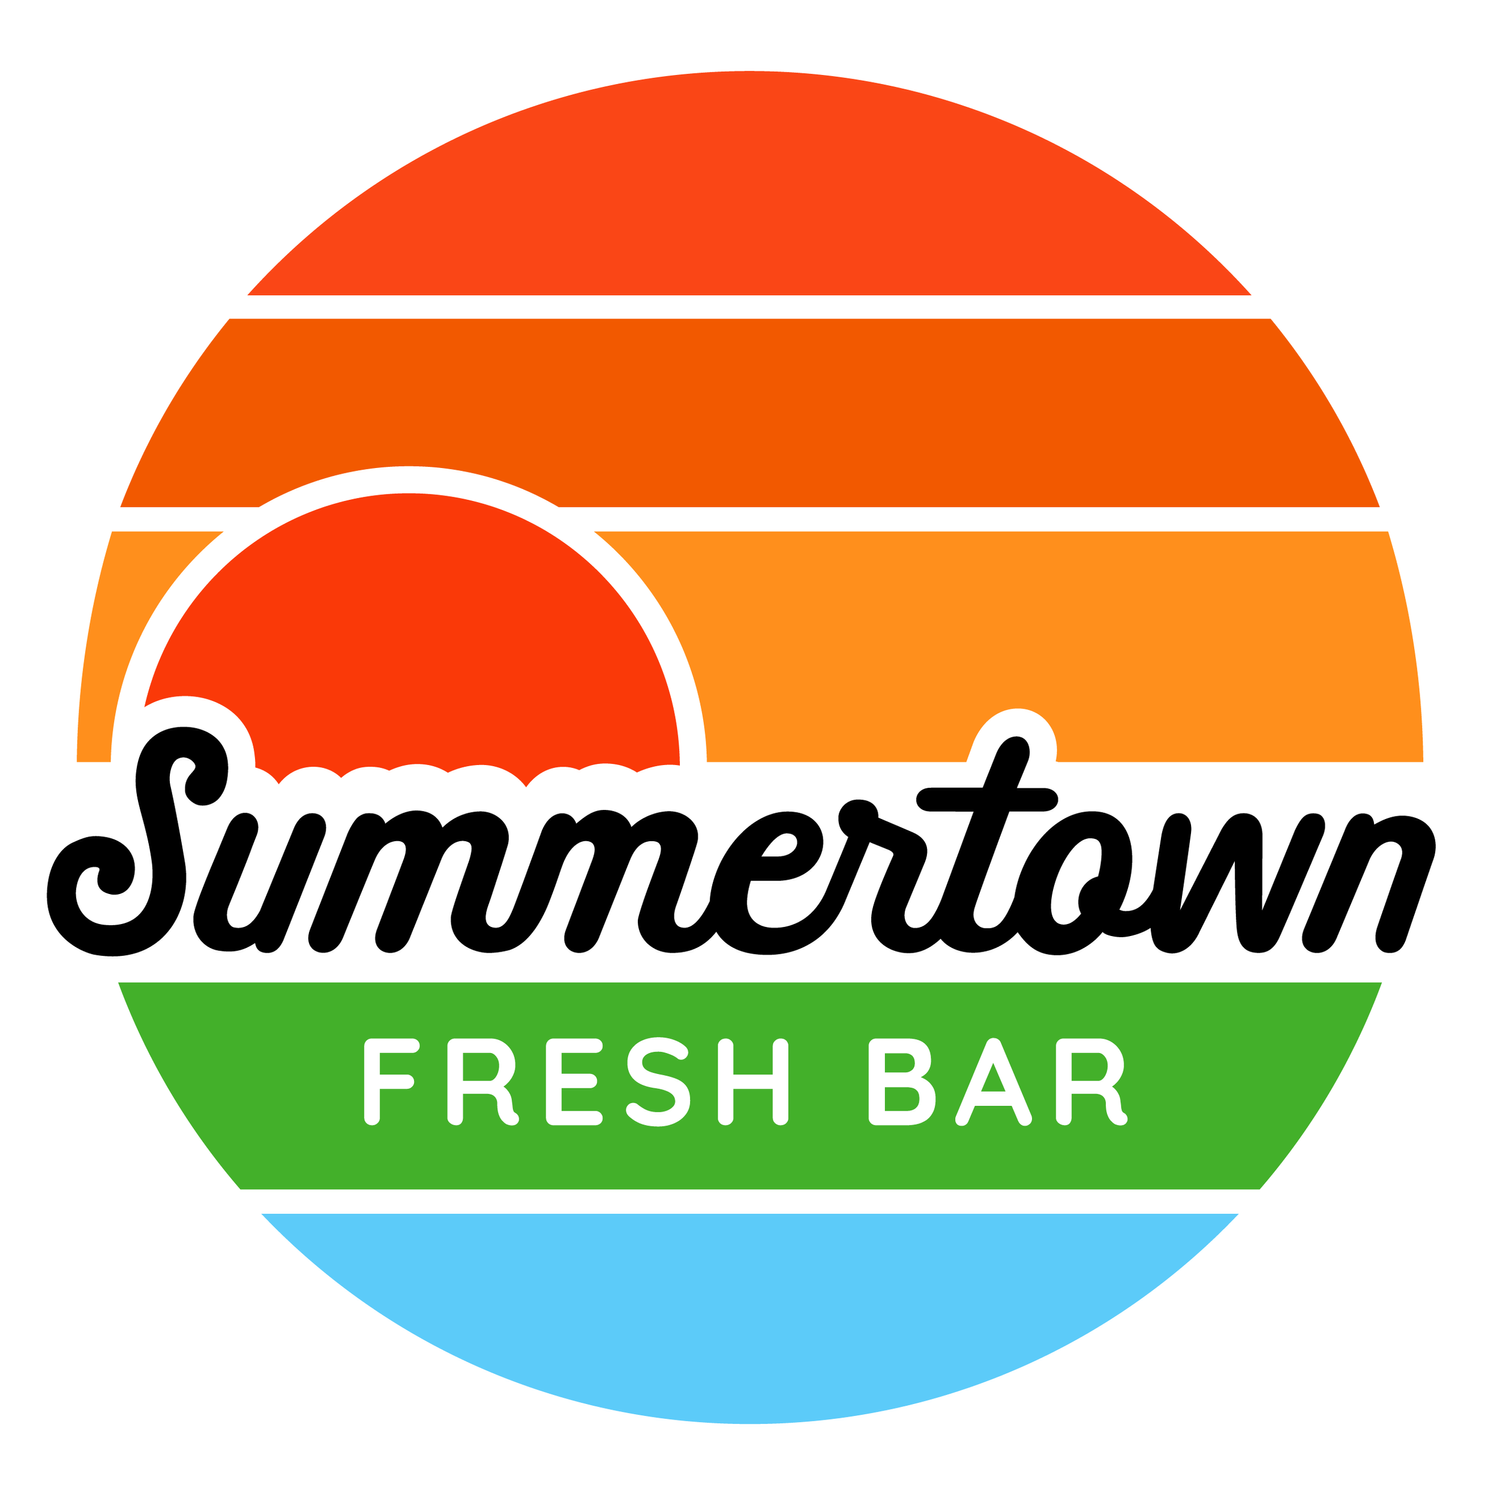  Summertown Fresh Bar